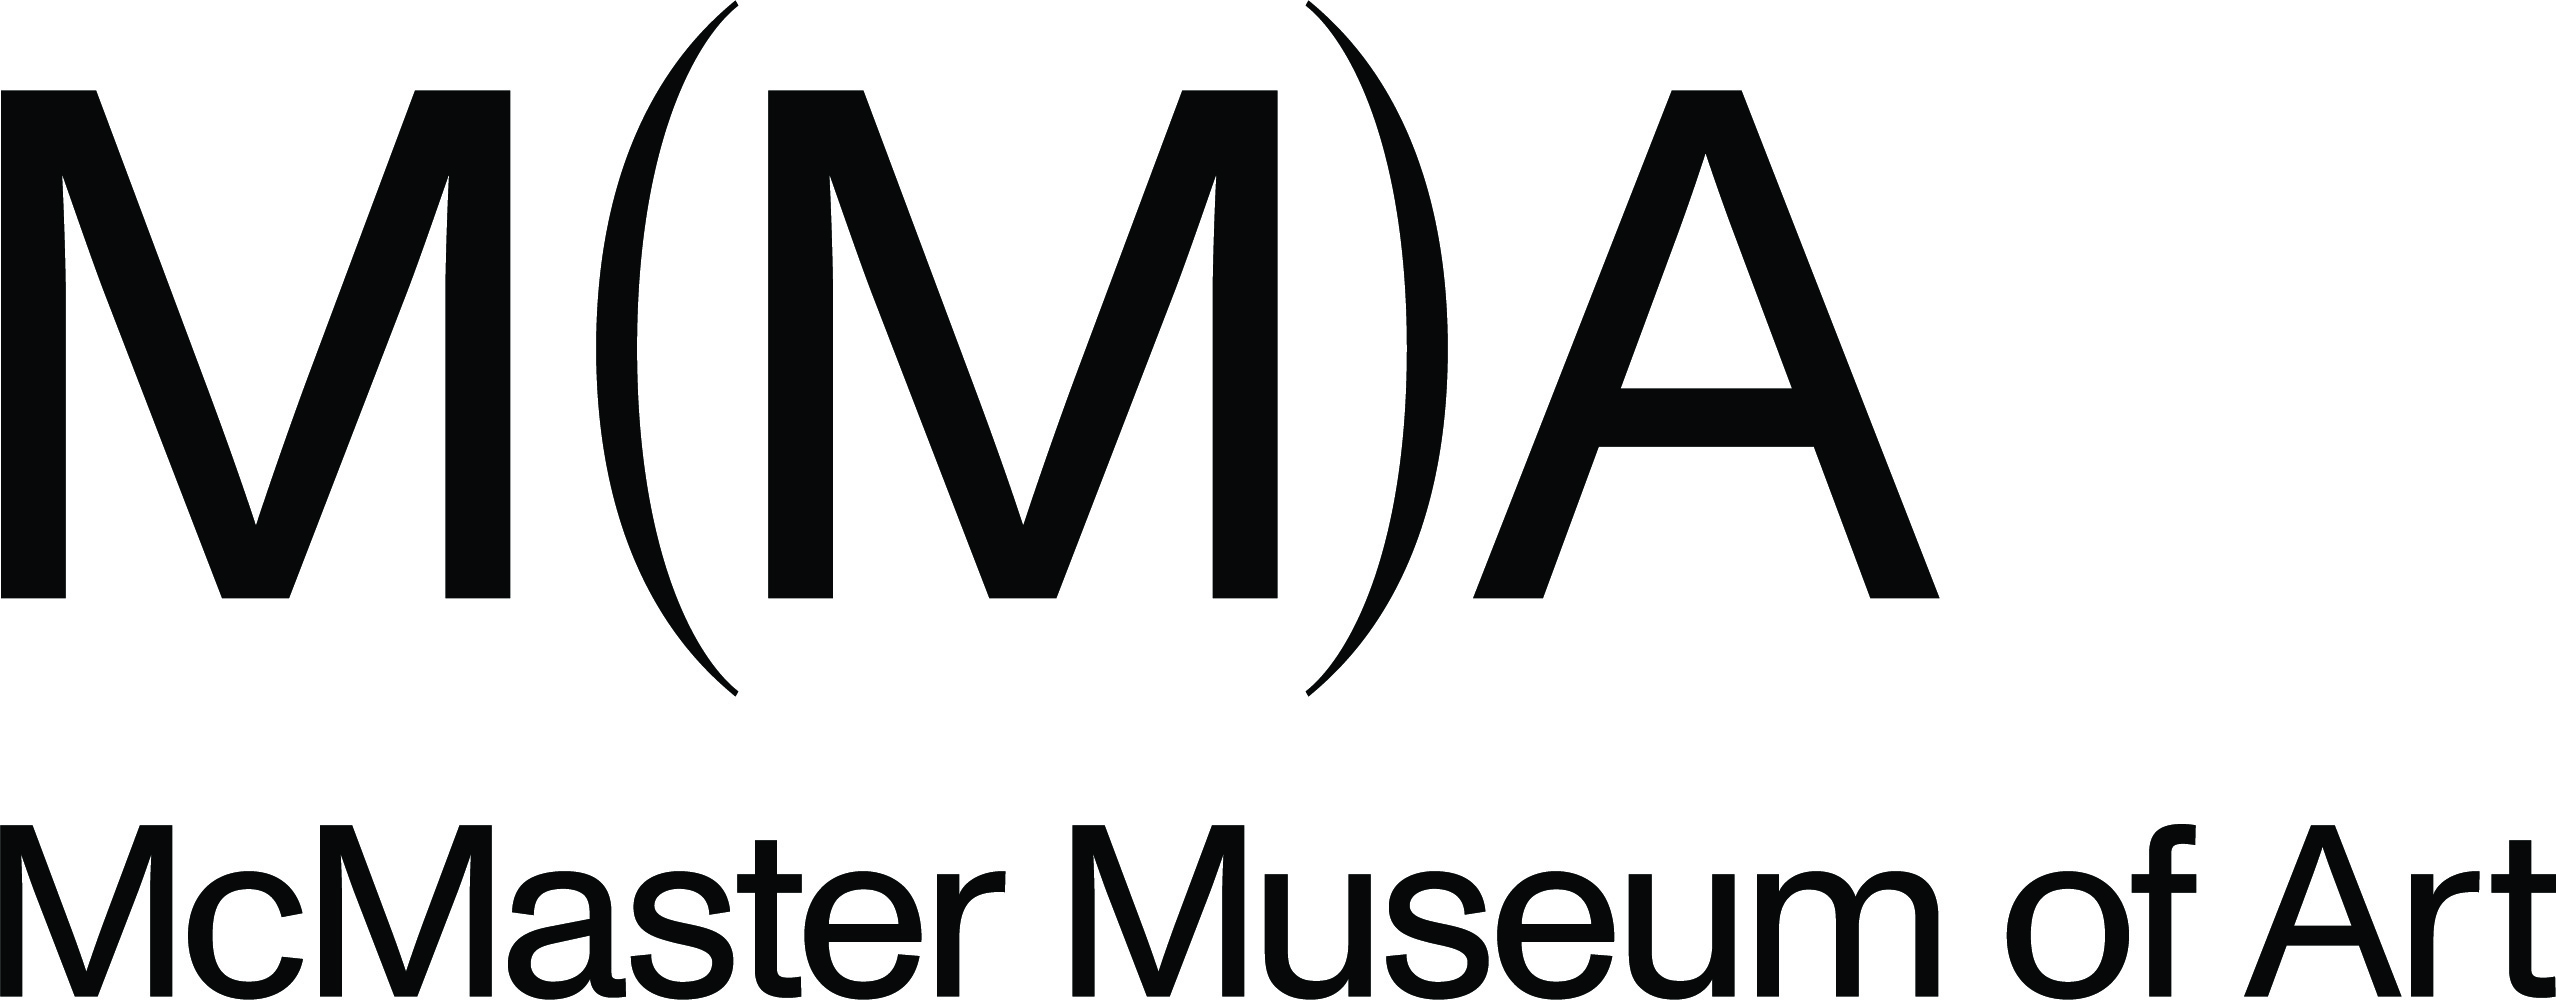 McMaster Museum of Art logo 